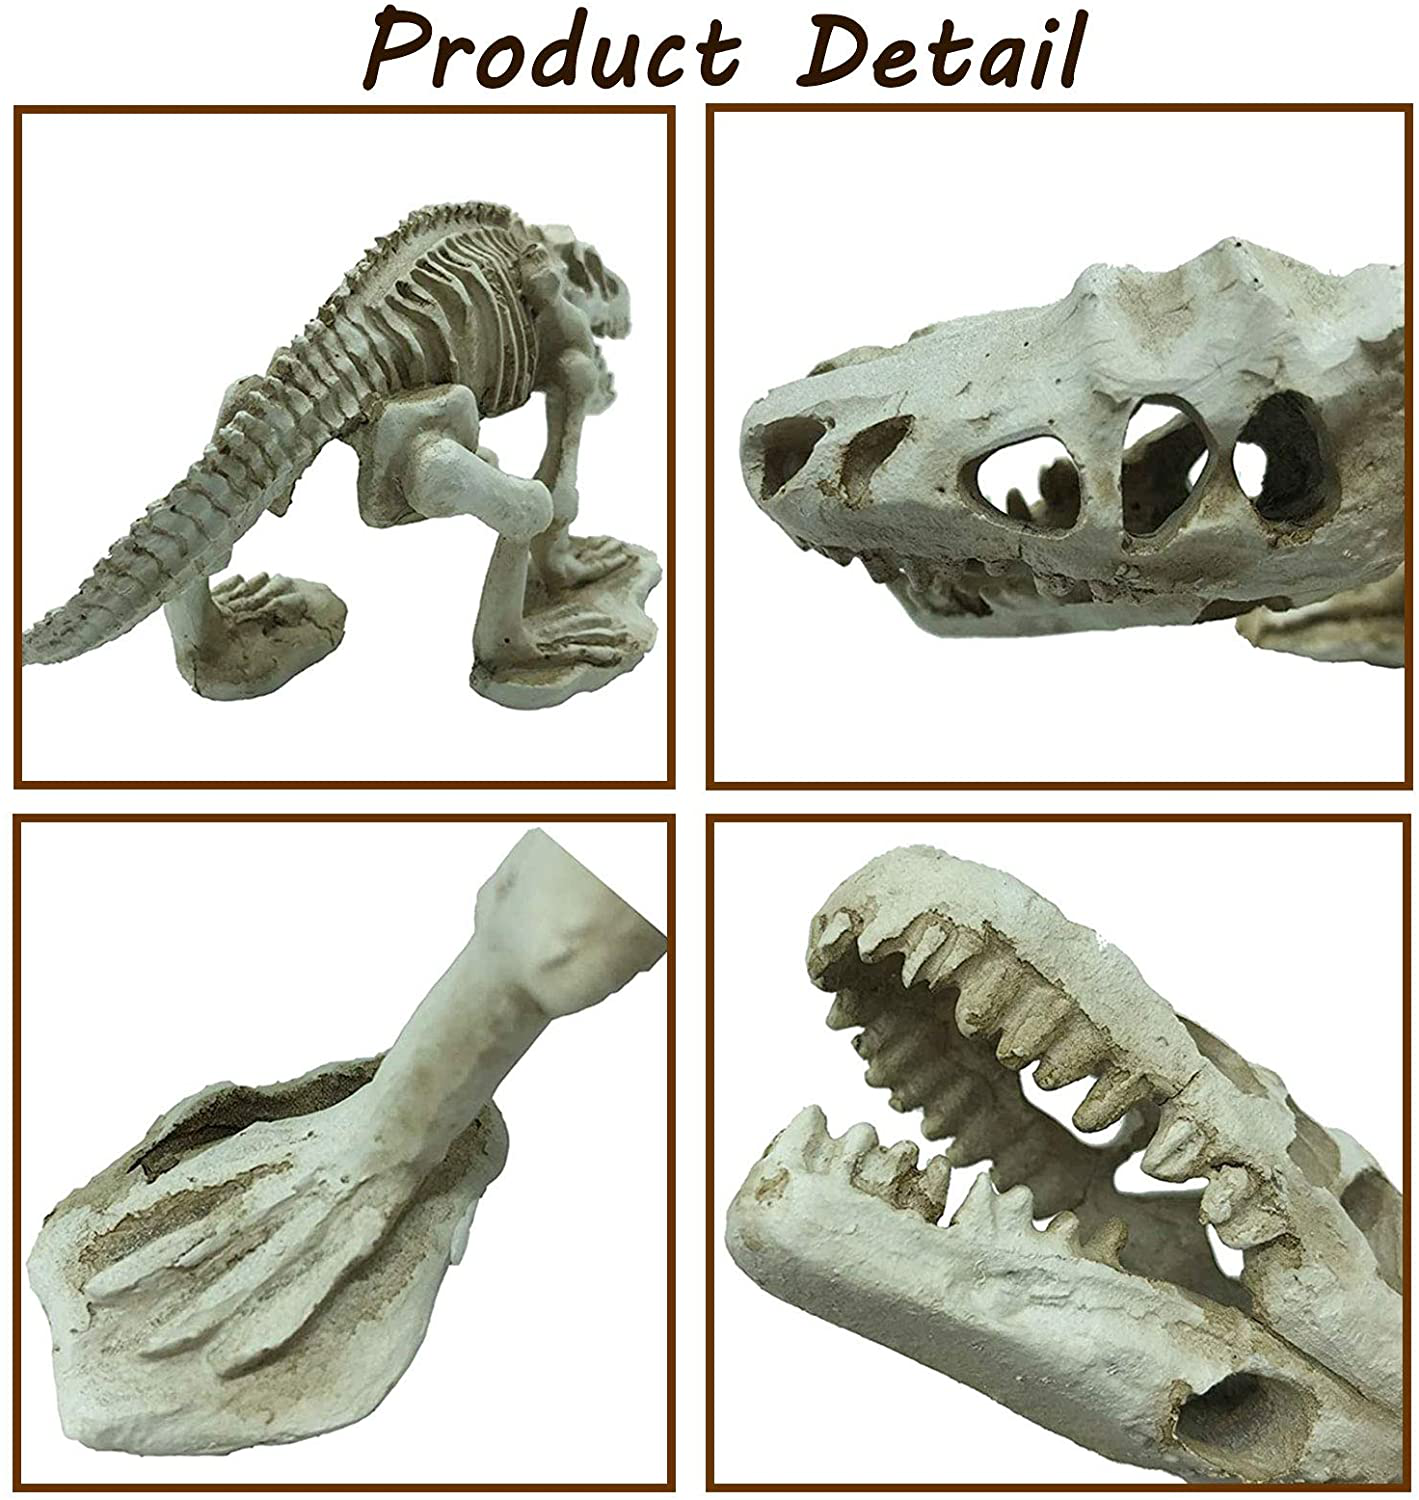 Tfwadmx Bearded Dragon Tank Accessories Resin Dinosaur Skeleton Decoration Artificial Dinosaur Fossil Reptile Ornament Habitat Bone Landscaping Decor or Gecko,Snakes,Lizard and Fish(4 Pcs)